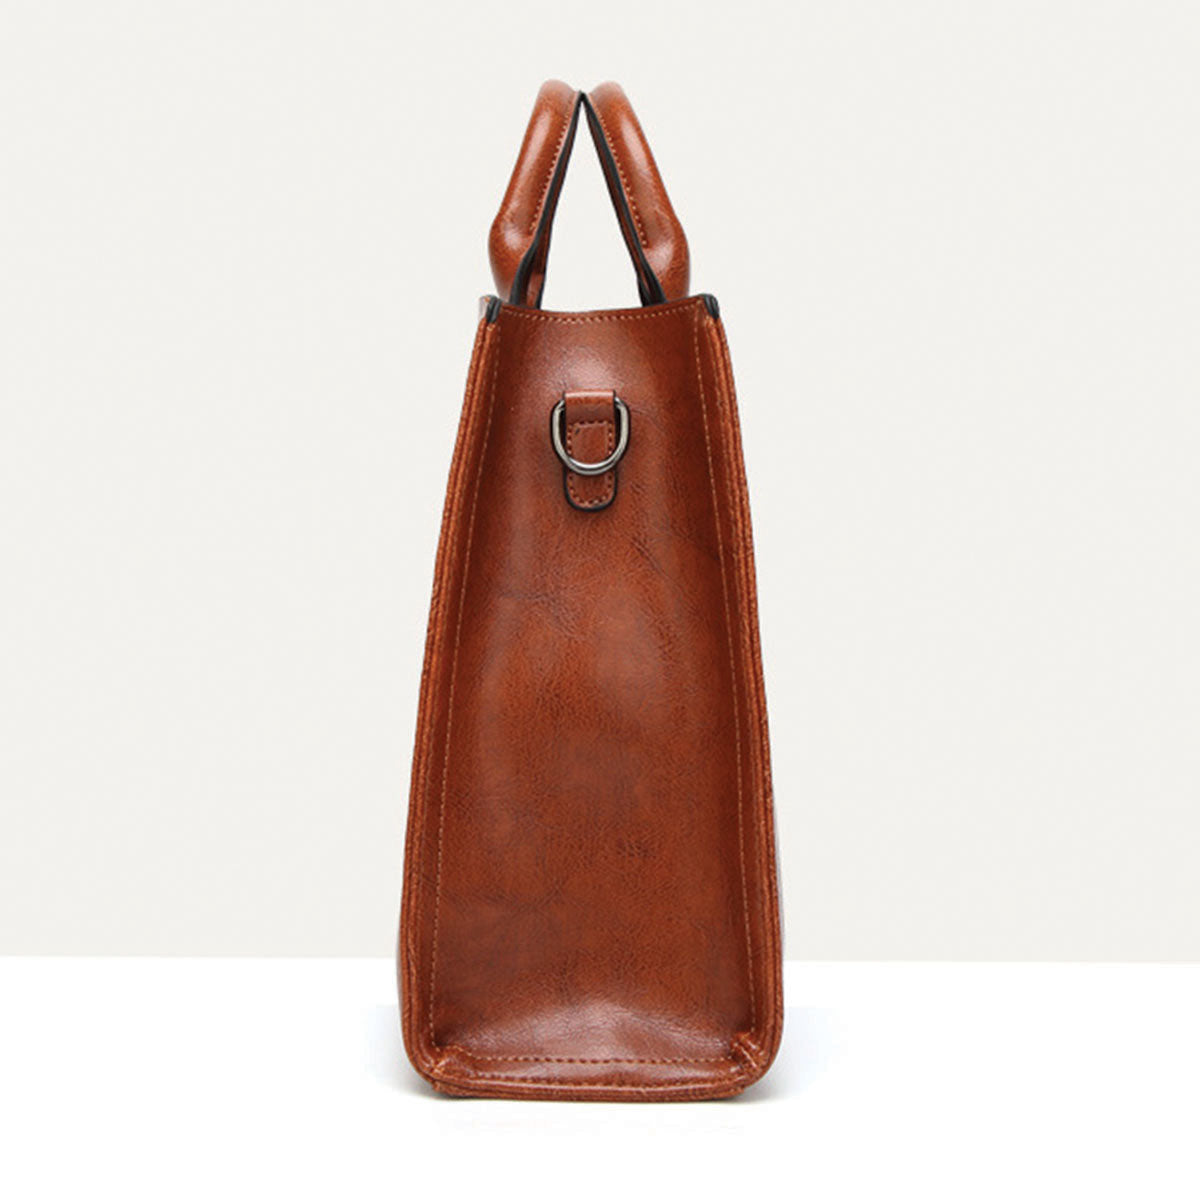 Your Best Companion - Golden Retriever Luxury Handbag V1